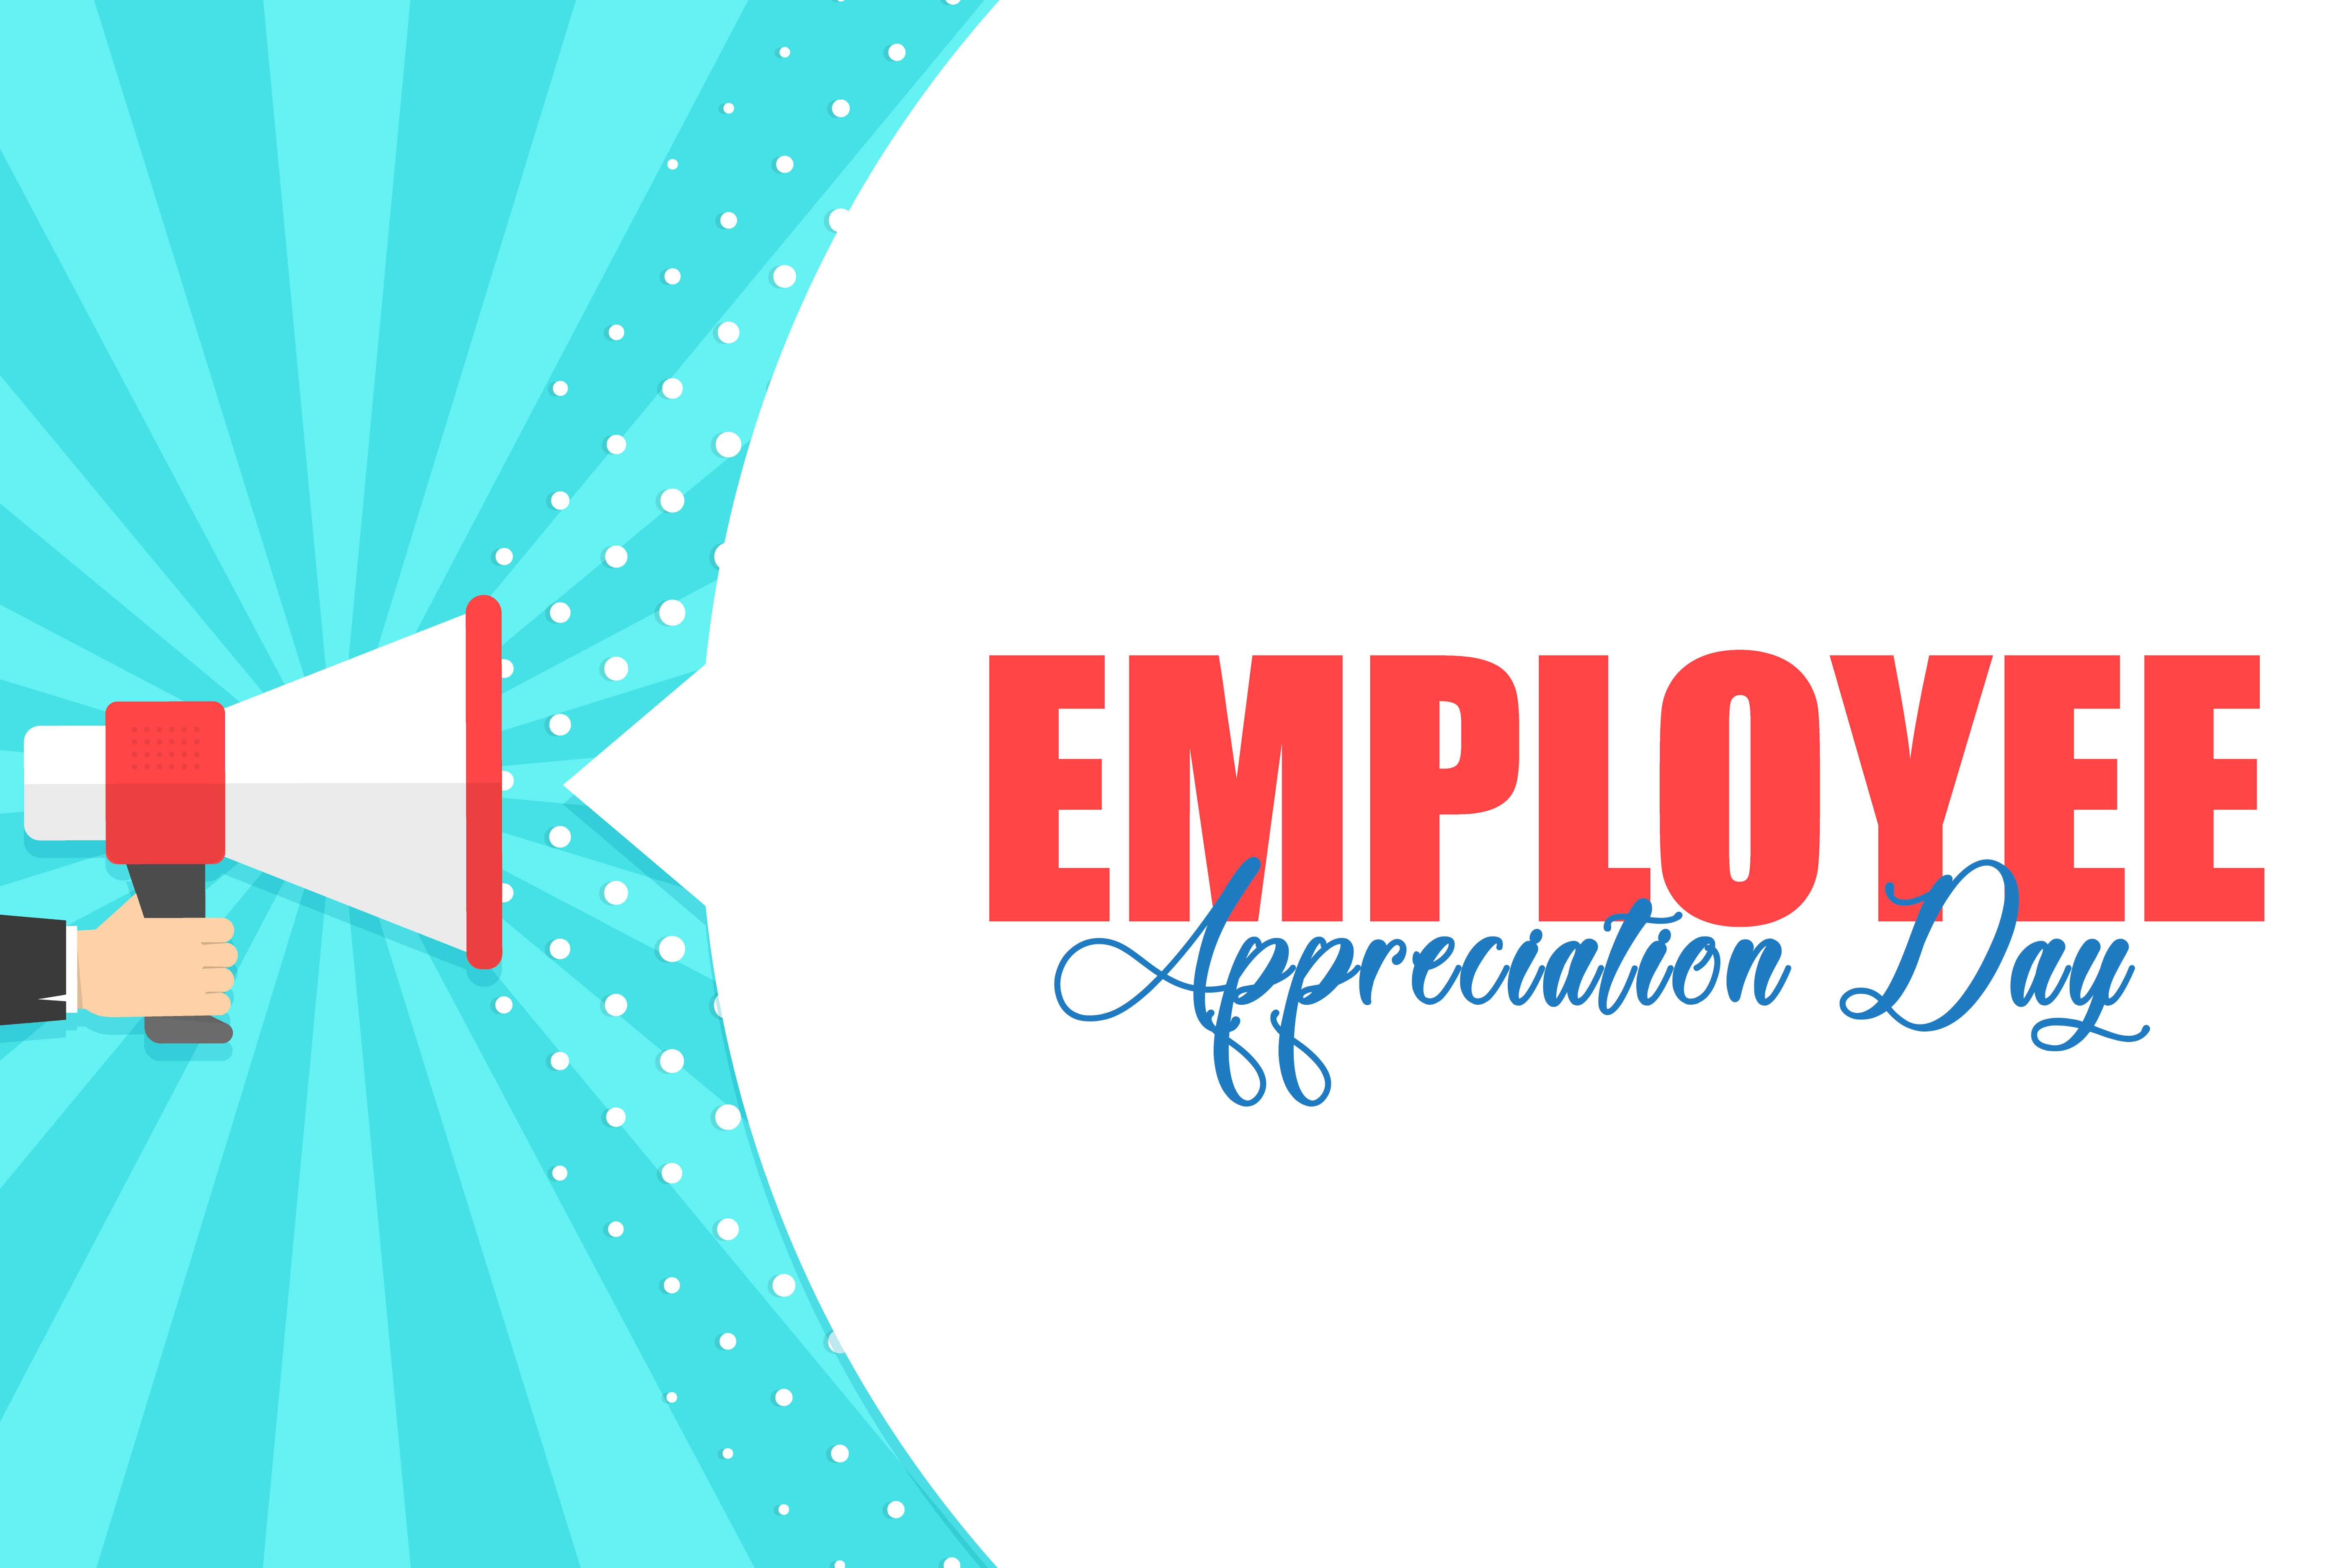 National Employee Appreciation Day ICA Agency Alliance, Inc.